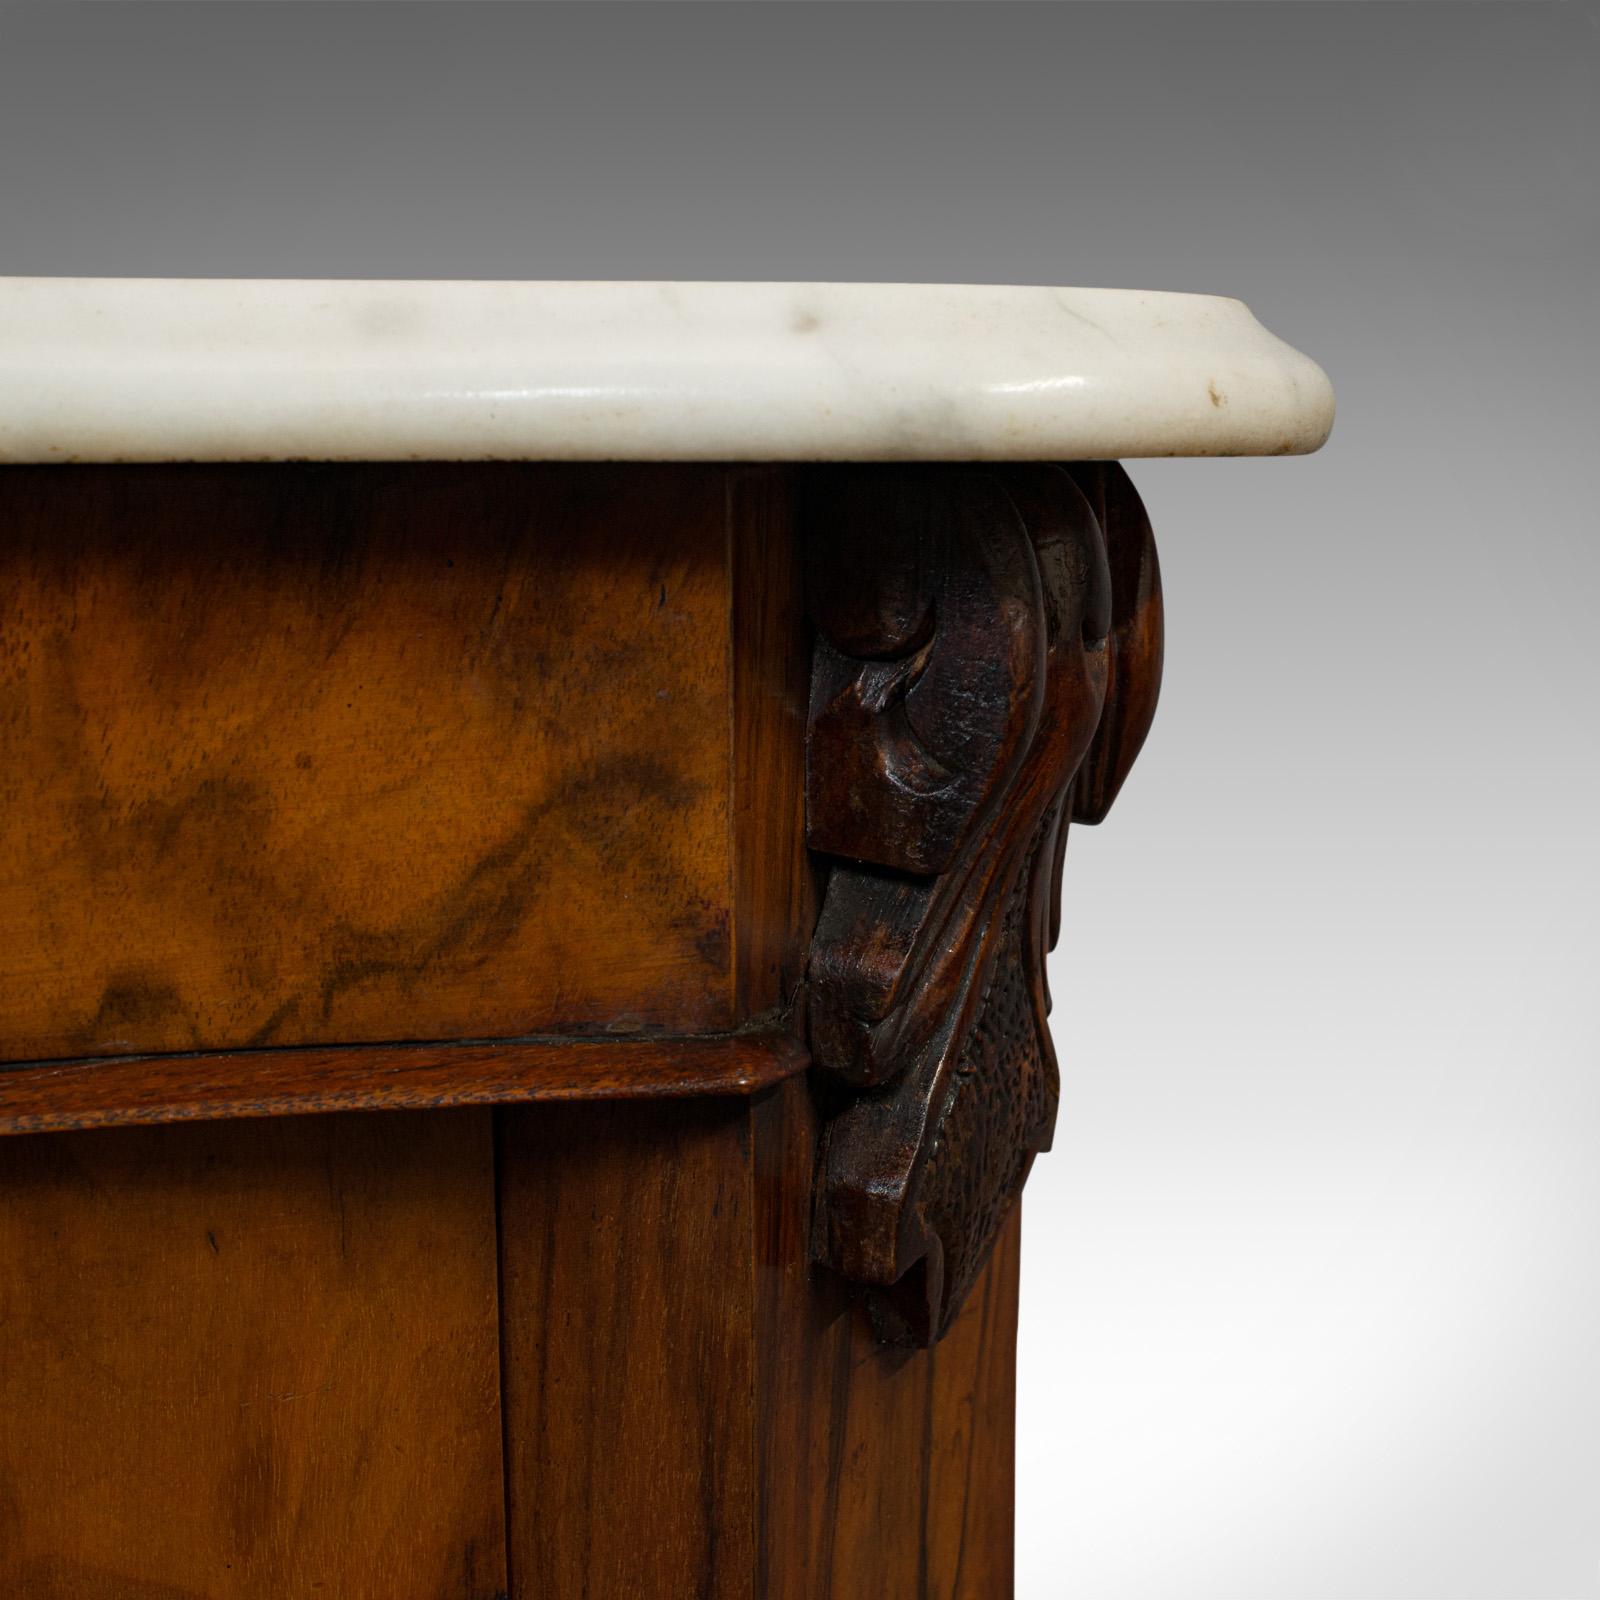 Antique Mirrored Side Cabinet, English, Walnut, Marble, Dresser, Victorian, 1850 3